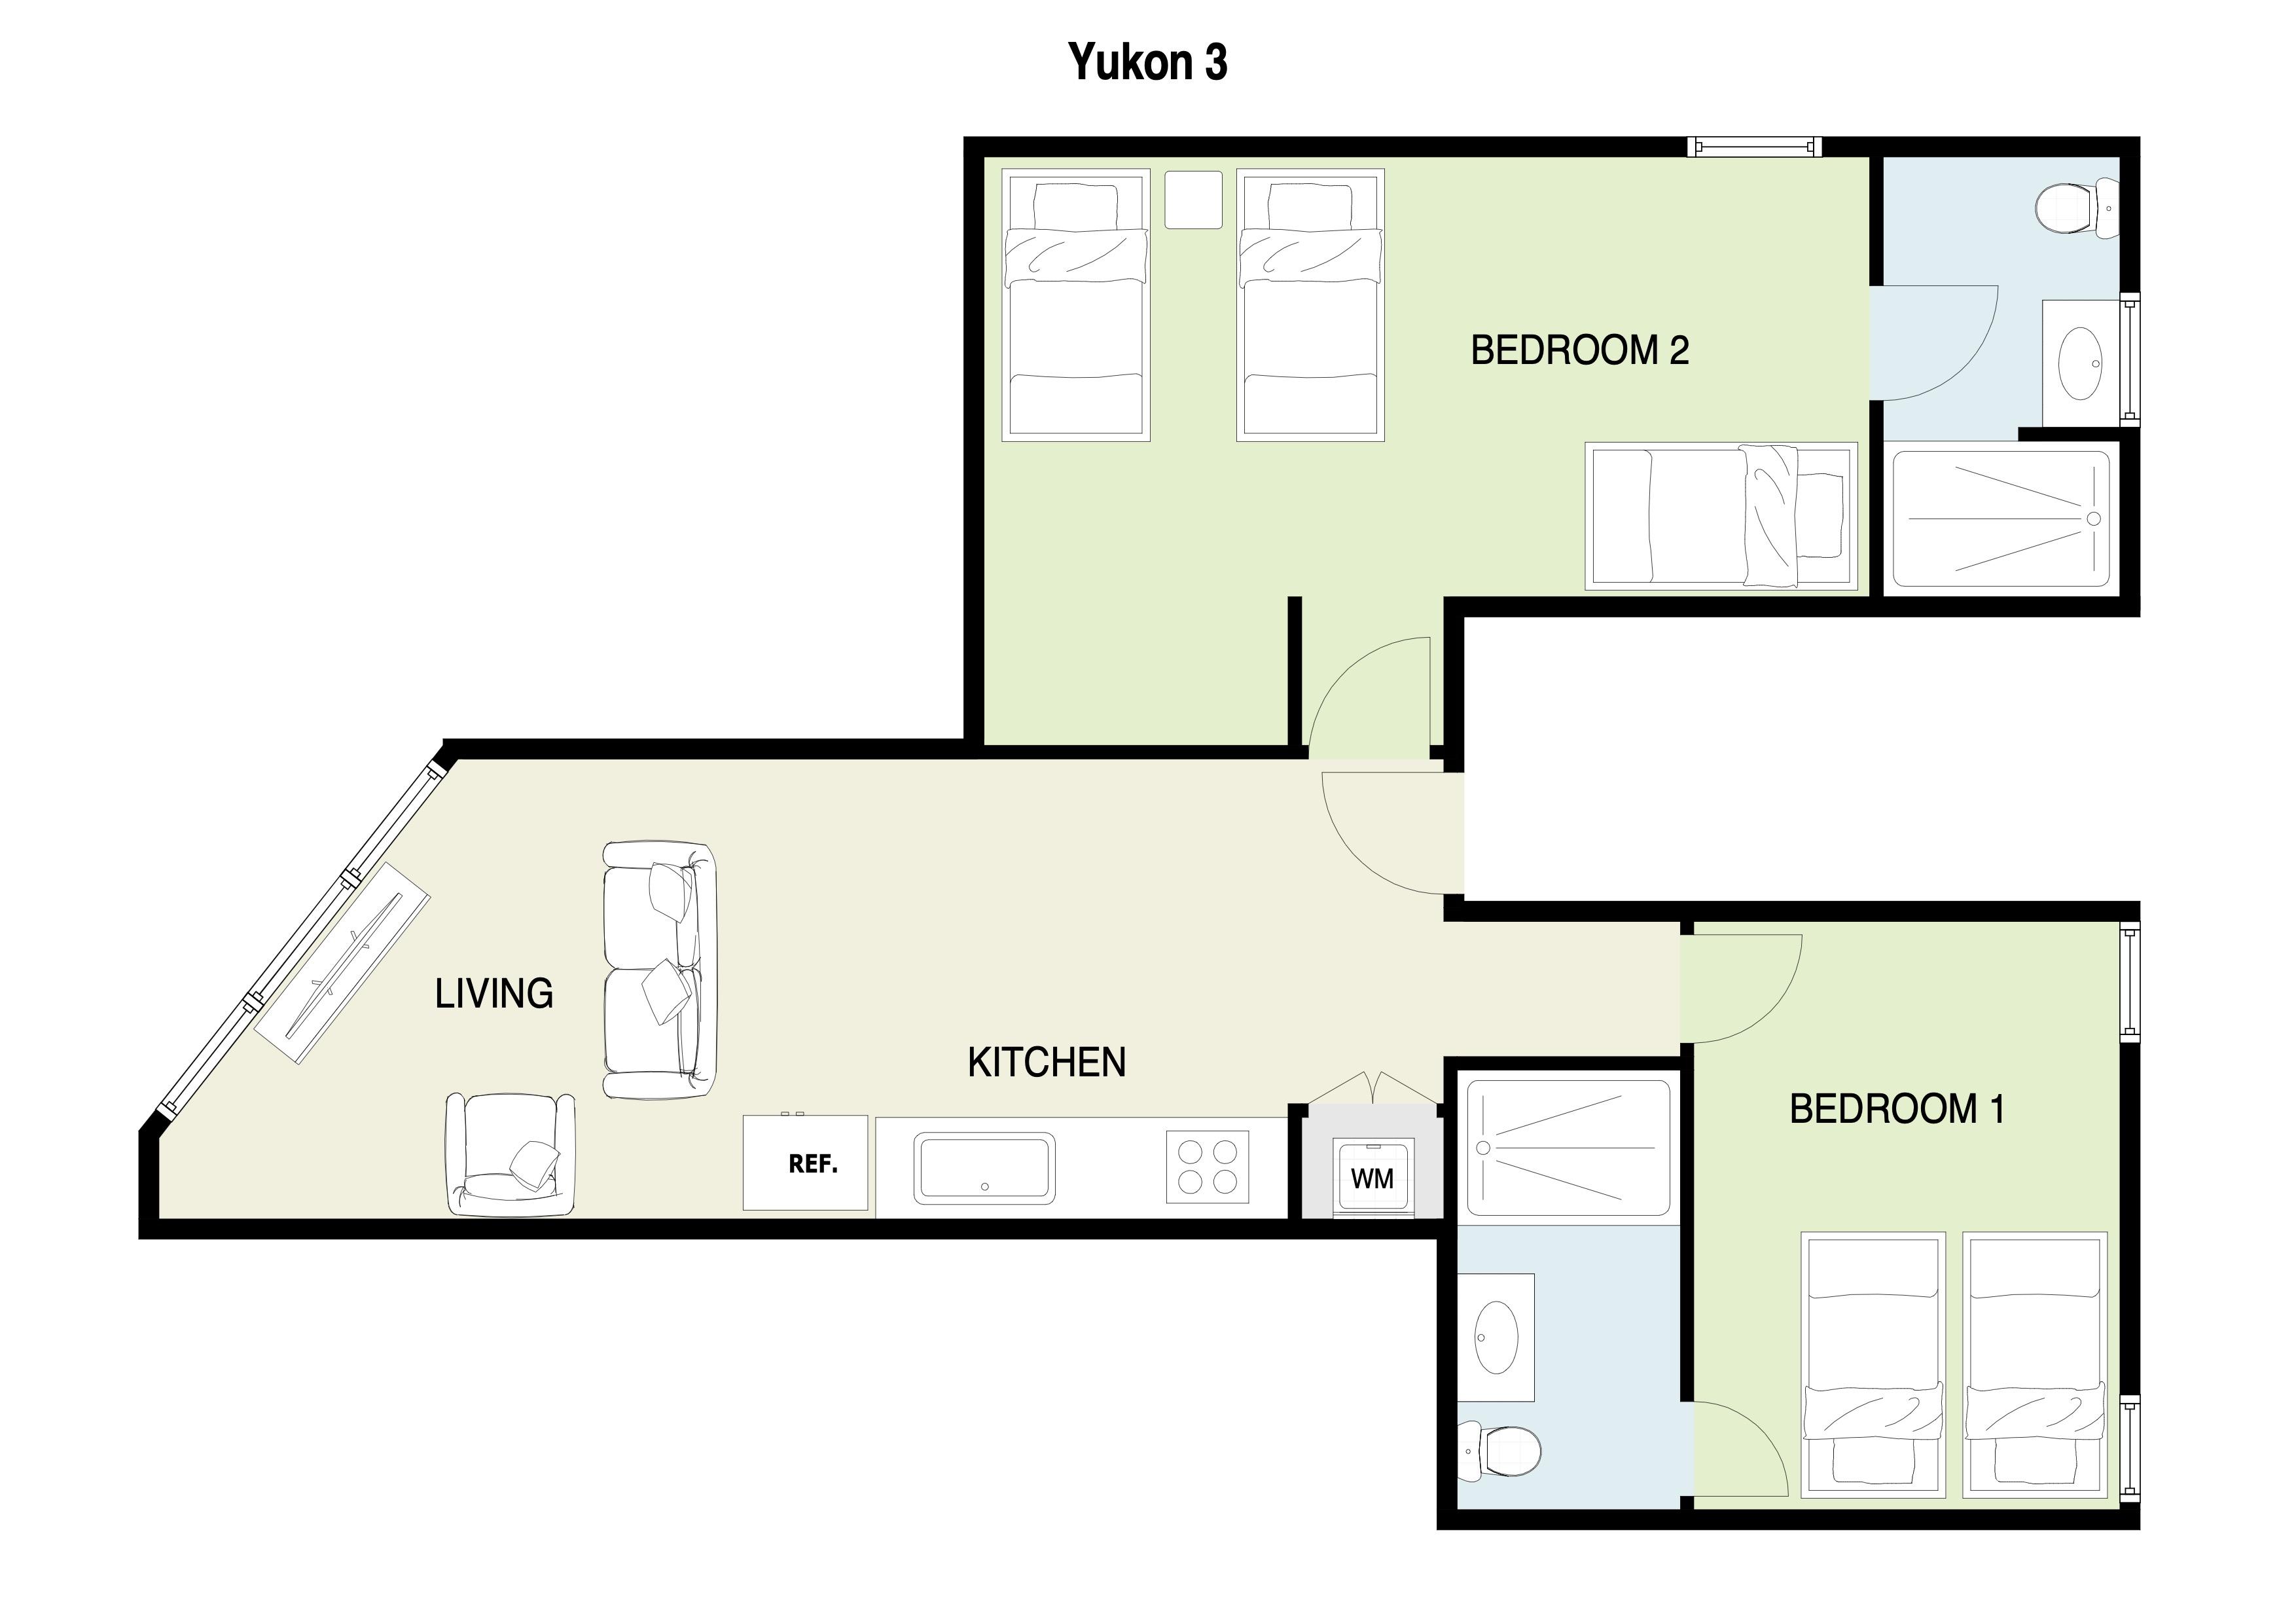 Yukon 3 floor plan